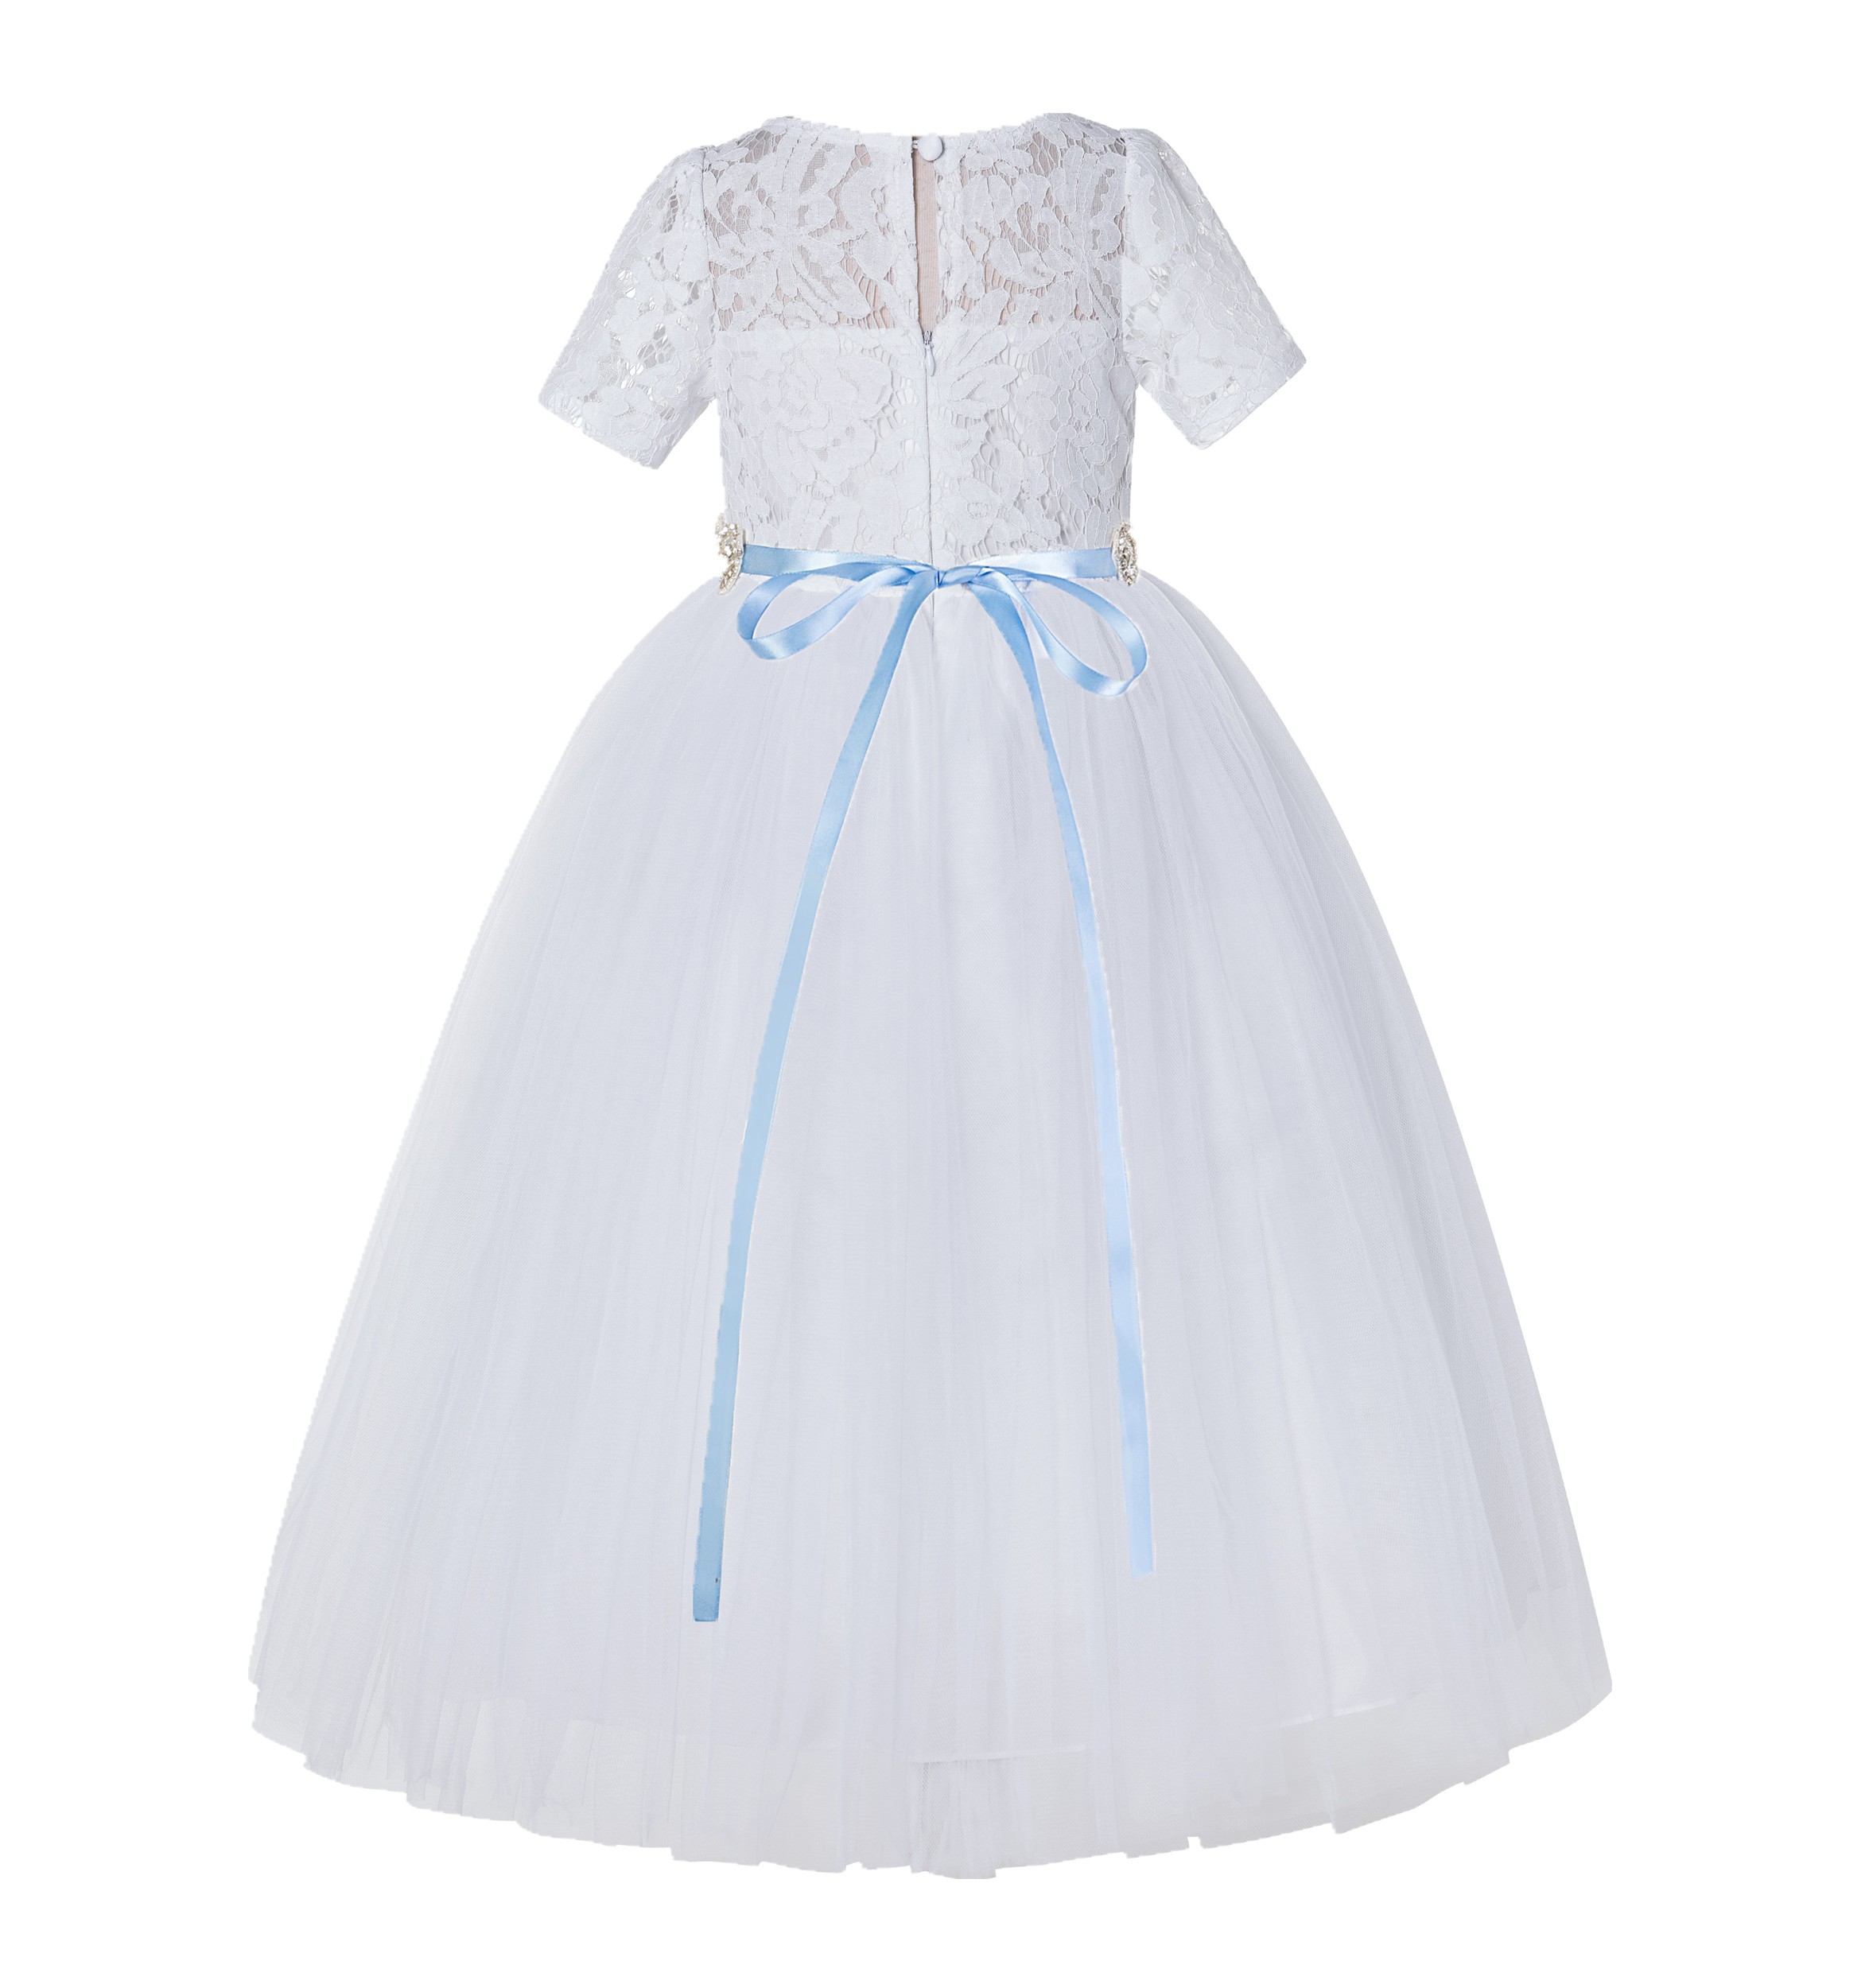 White / Dusty Blue Floral Lace Flower Girl Dress Communion Dress LG2